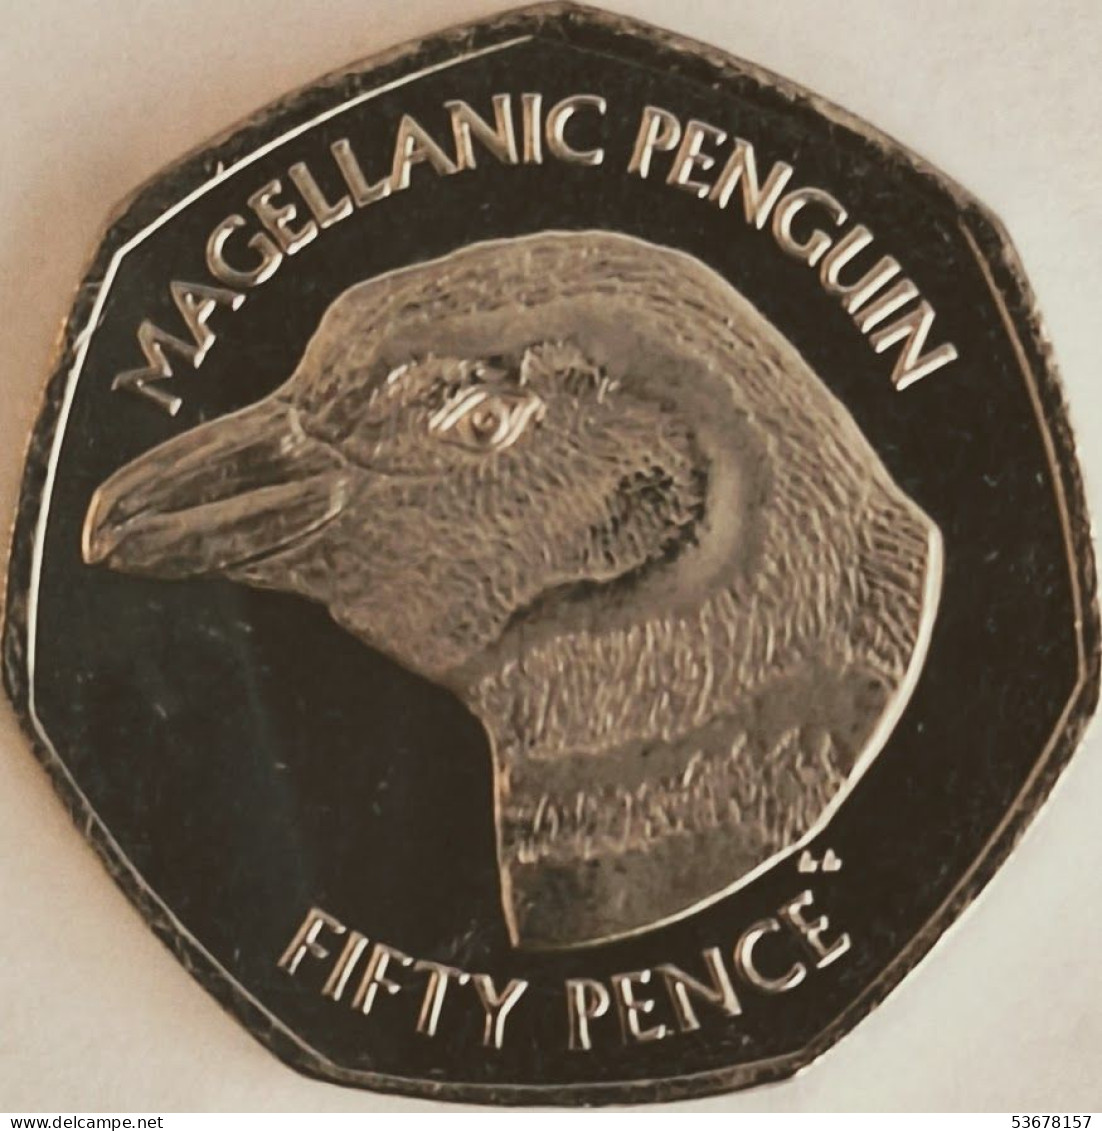 Falkland Islands - 50 Pence 2021AA, Magellanic Penguin, UC# 119 (#3871) - Falkland Islands